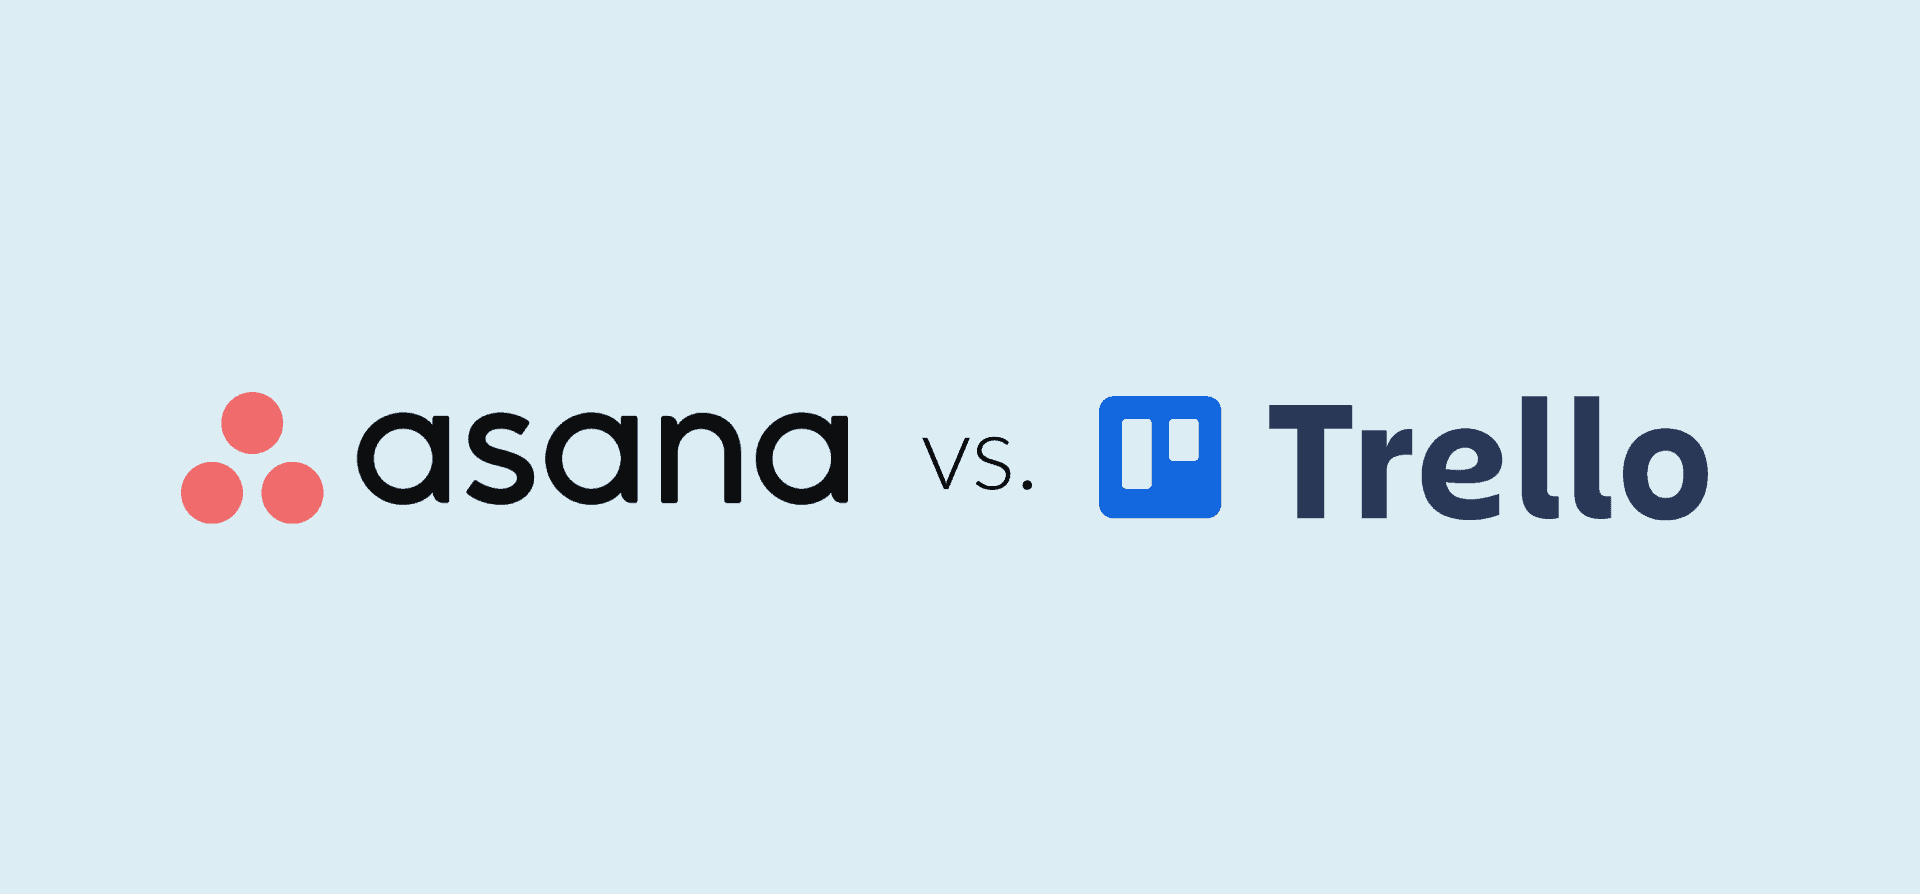 Logos for Asana and Trello, representing the Asana vs. Trello blog post